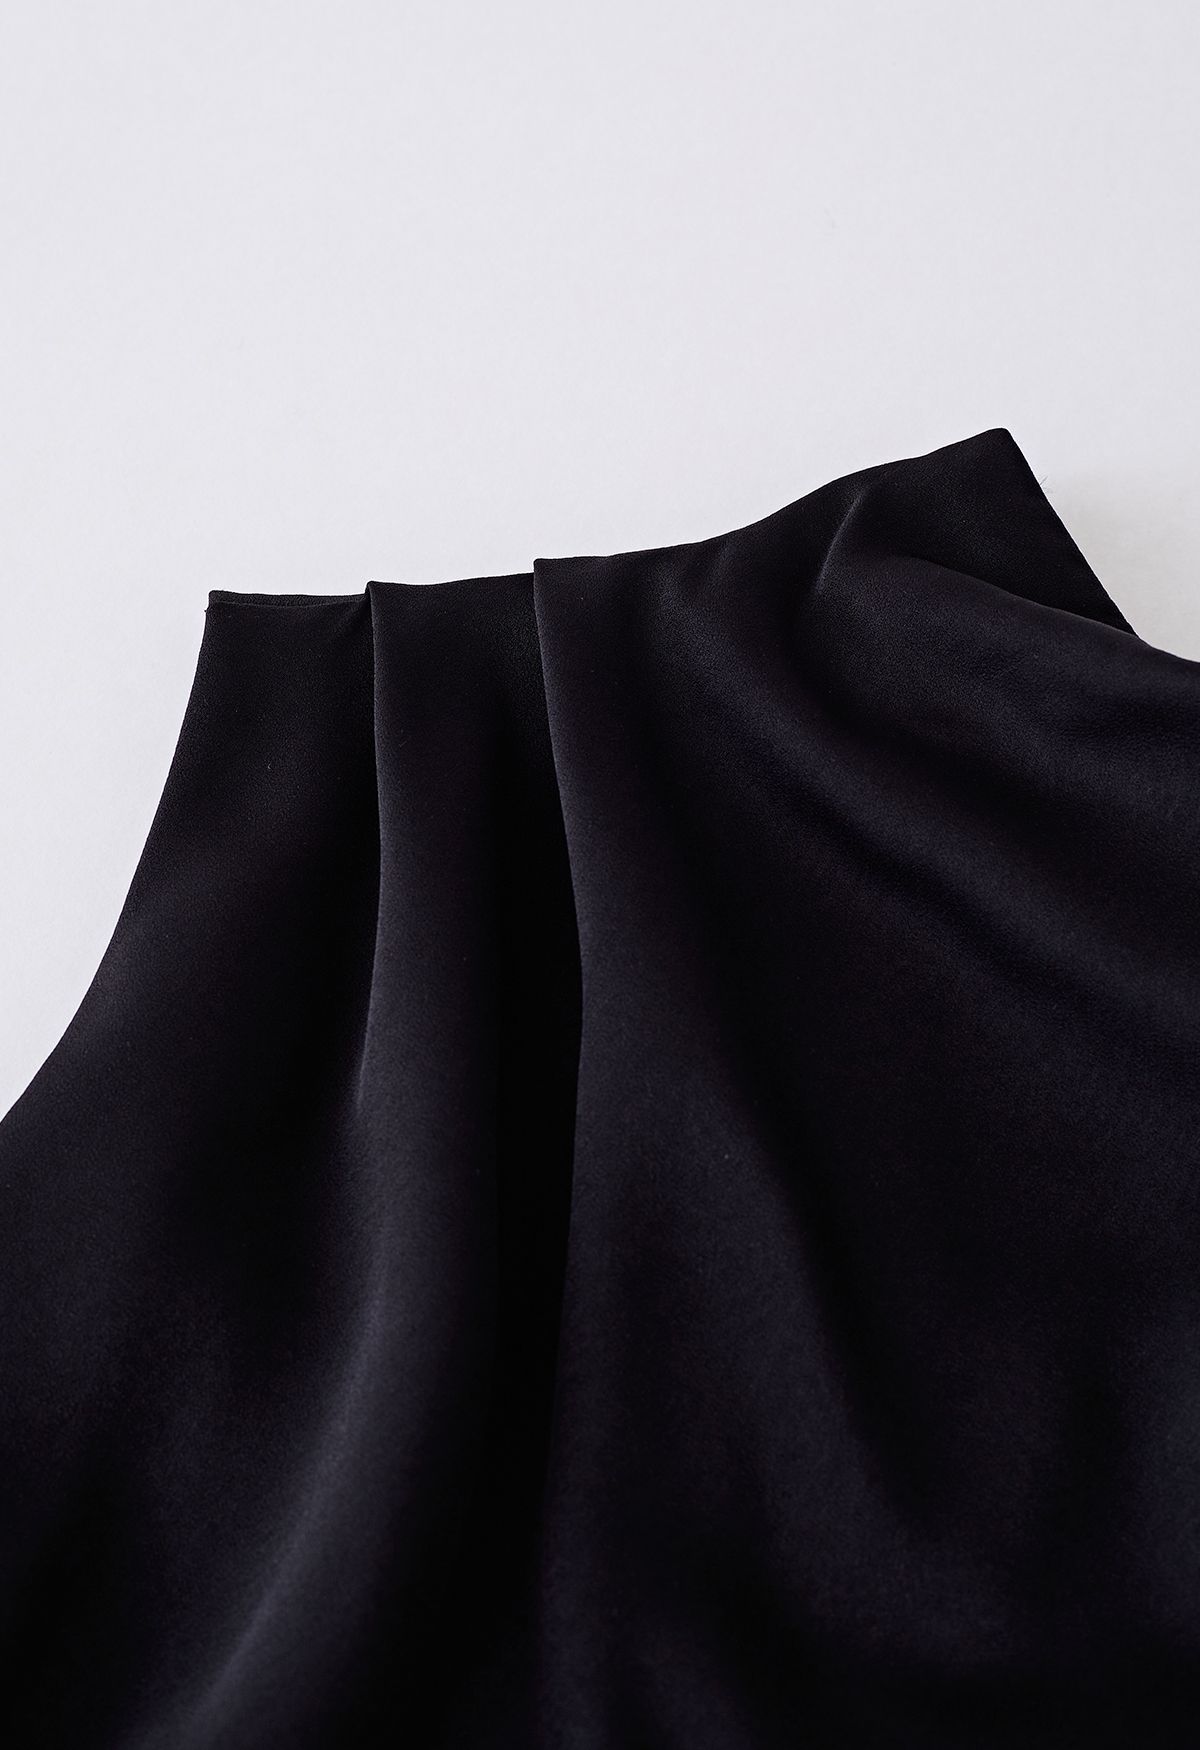 Asymmetric Ruched Neckline Sleeveless Dress in Black